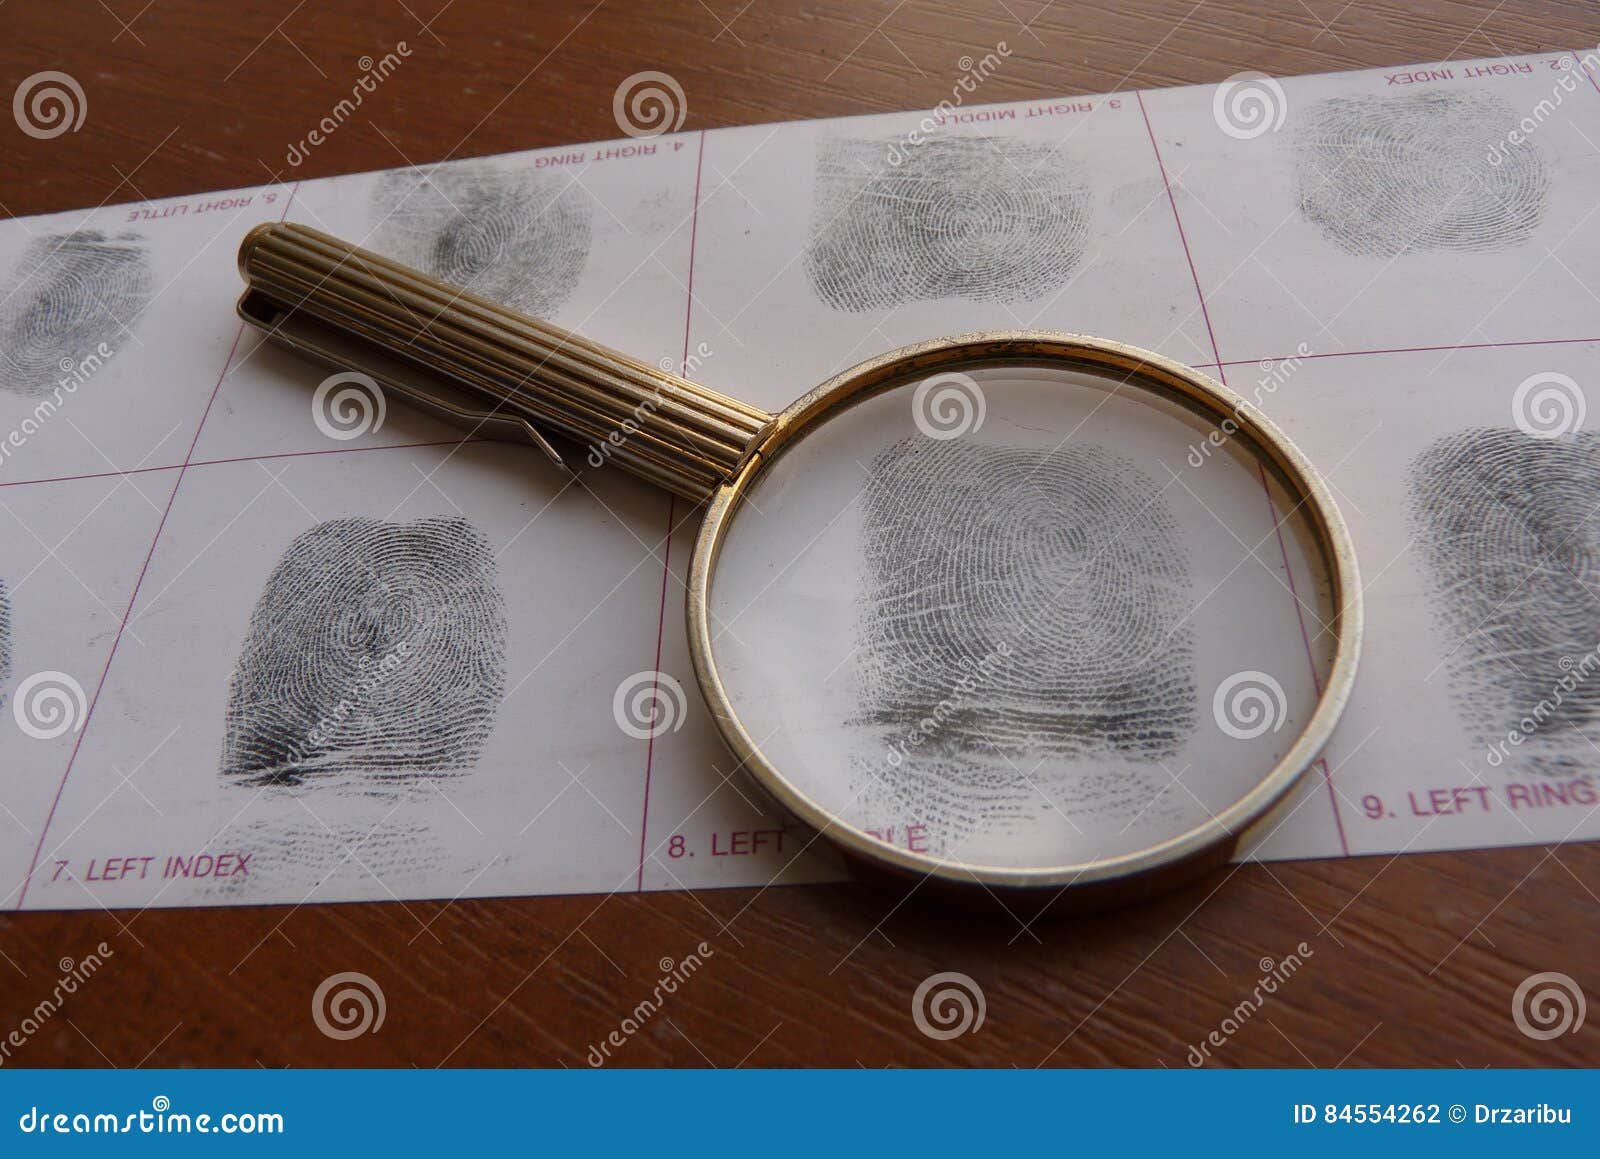 fingerprints examination